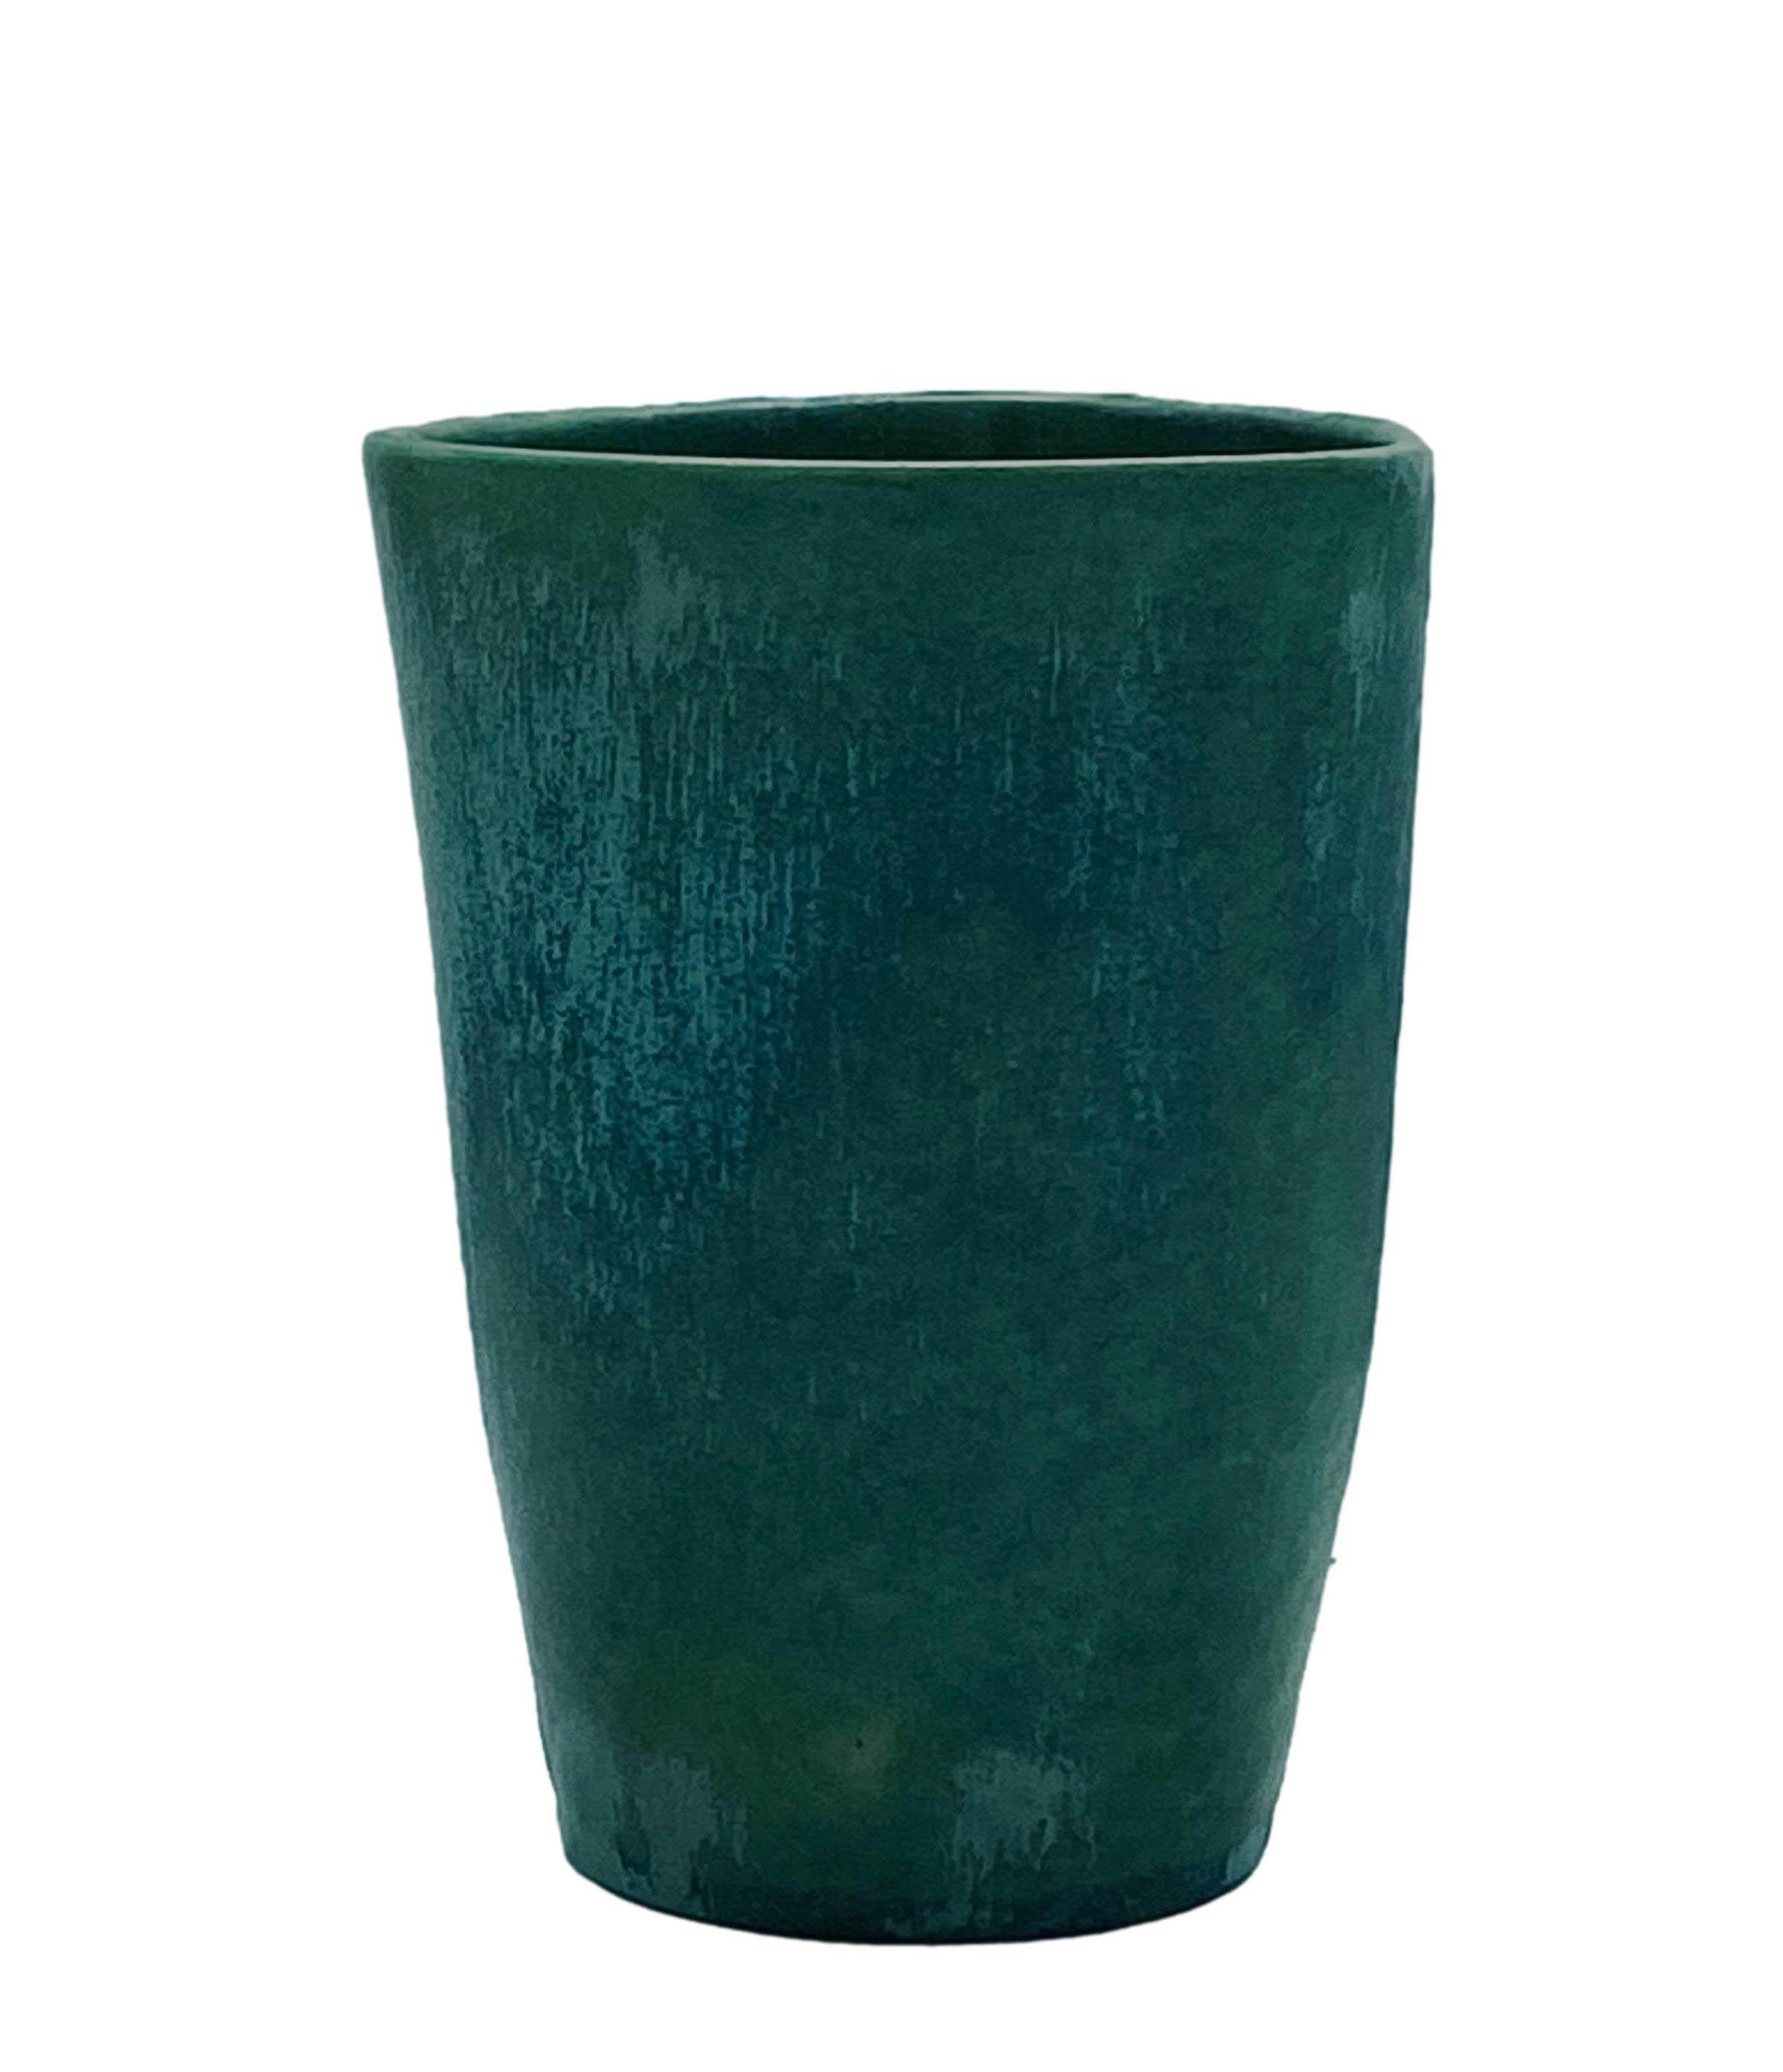 Small earthenware vase modelled by casting and glazed in matt green, by Guido Andlovitz for Societa'ceramica italiana Lavenia 1950. Mark under the base.
 